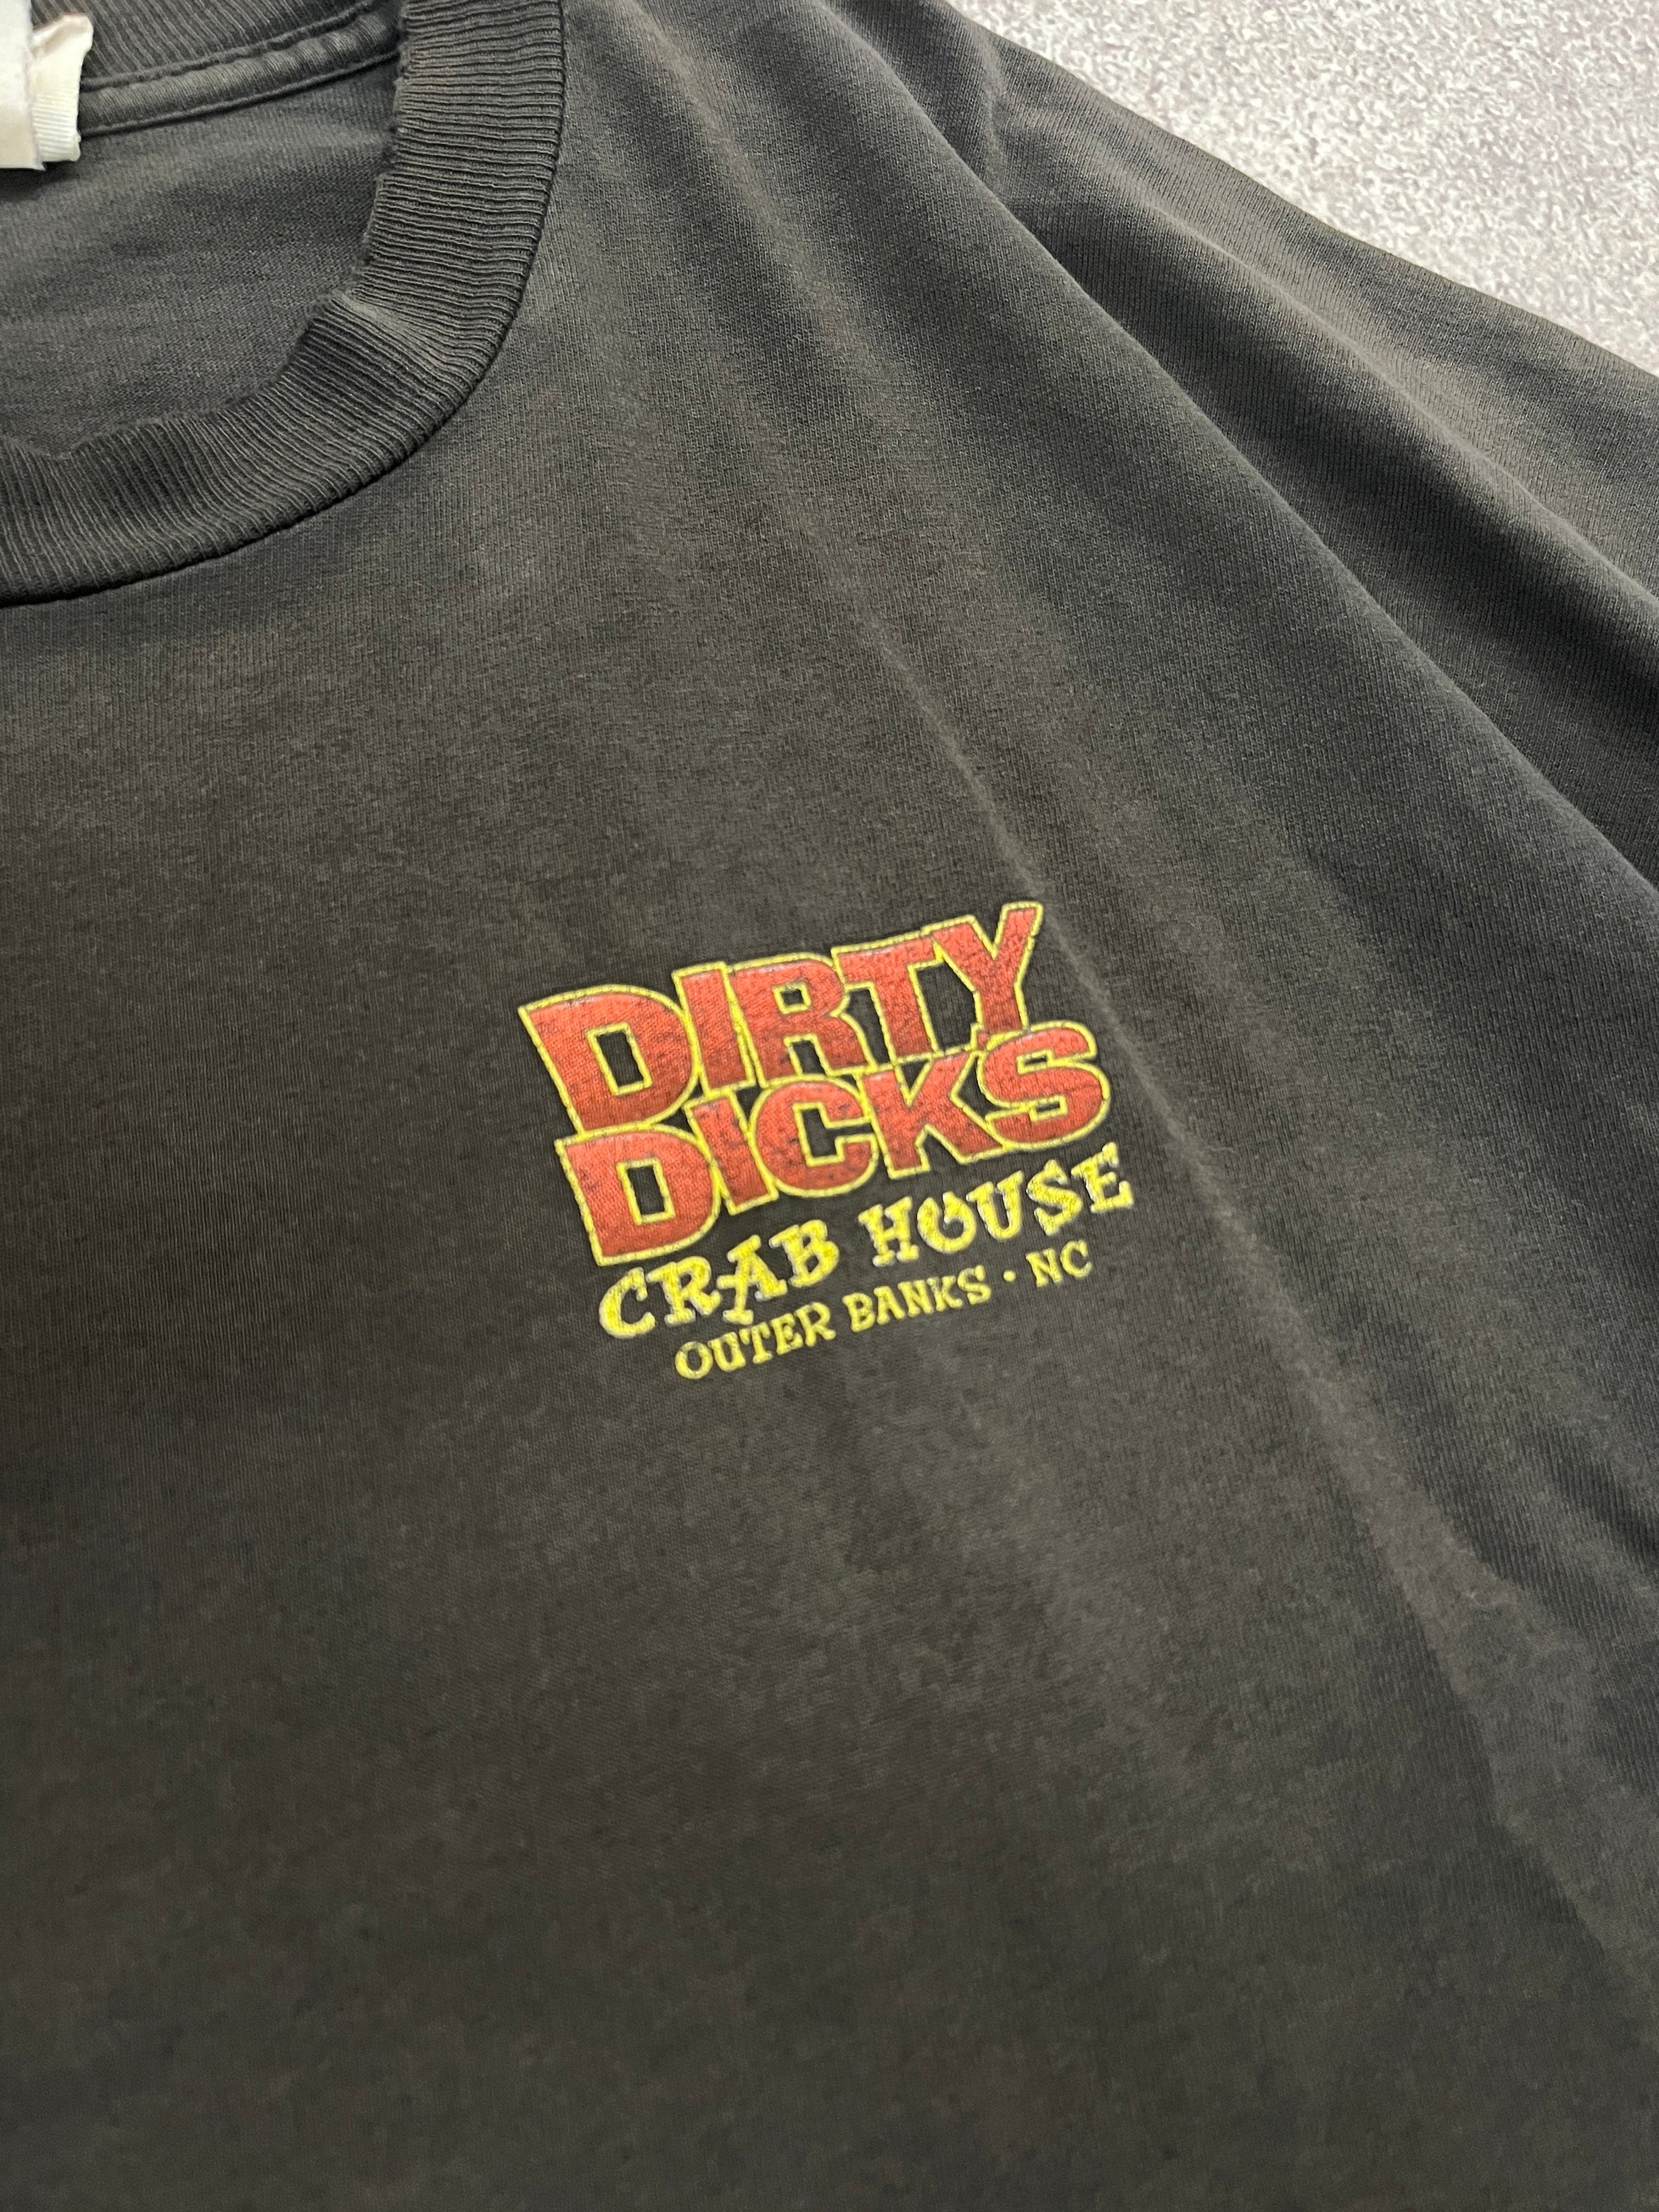 Dirty Dicks Crab House TShirt Black // X-Large - RHAGHOUSE VINTAGE